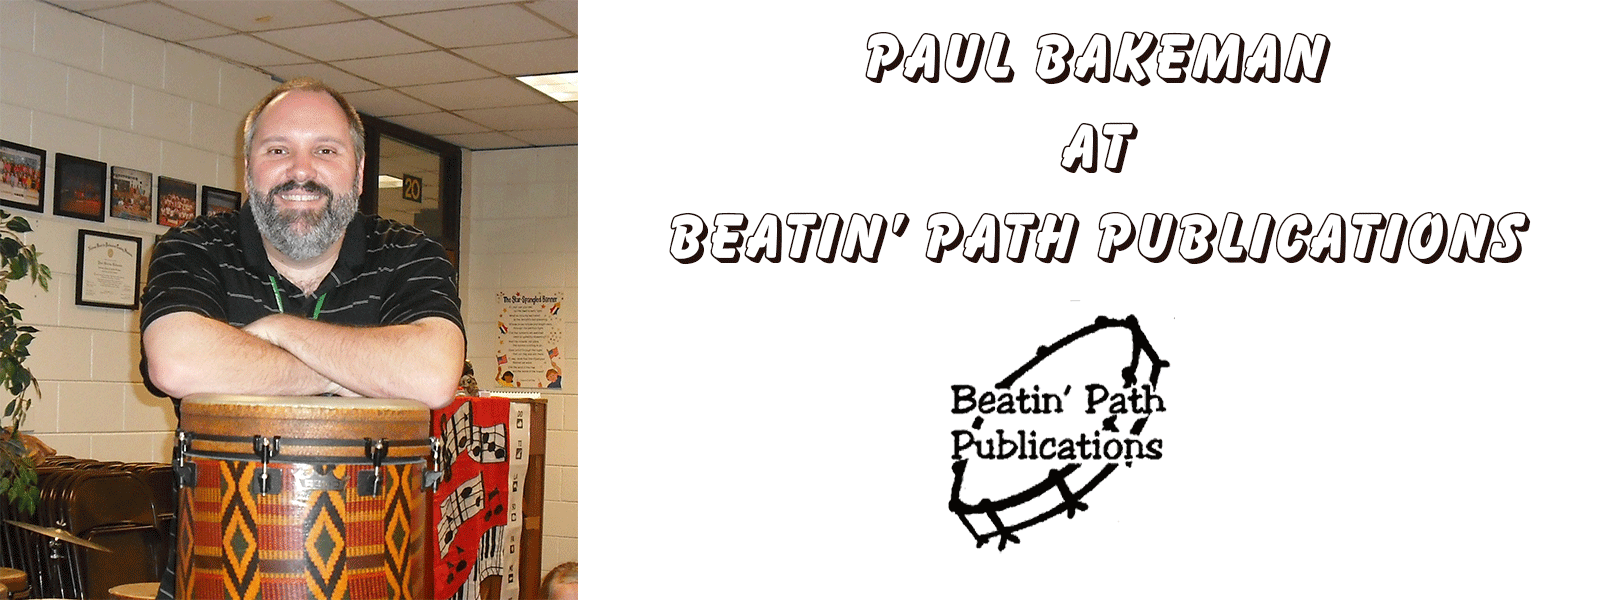 Paul Bakeman at Beatin' Path Publications